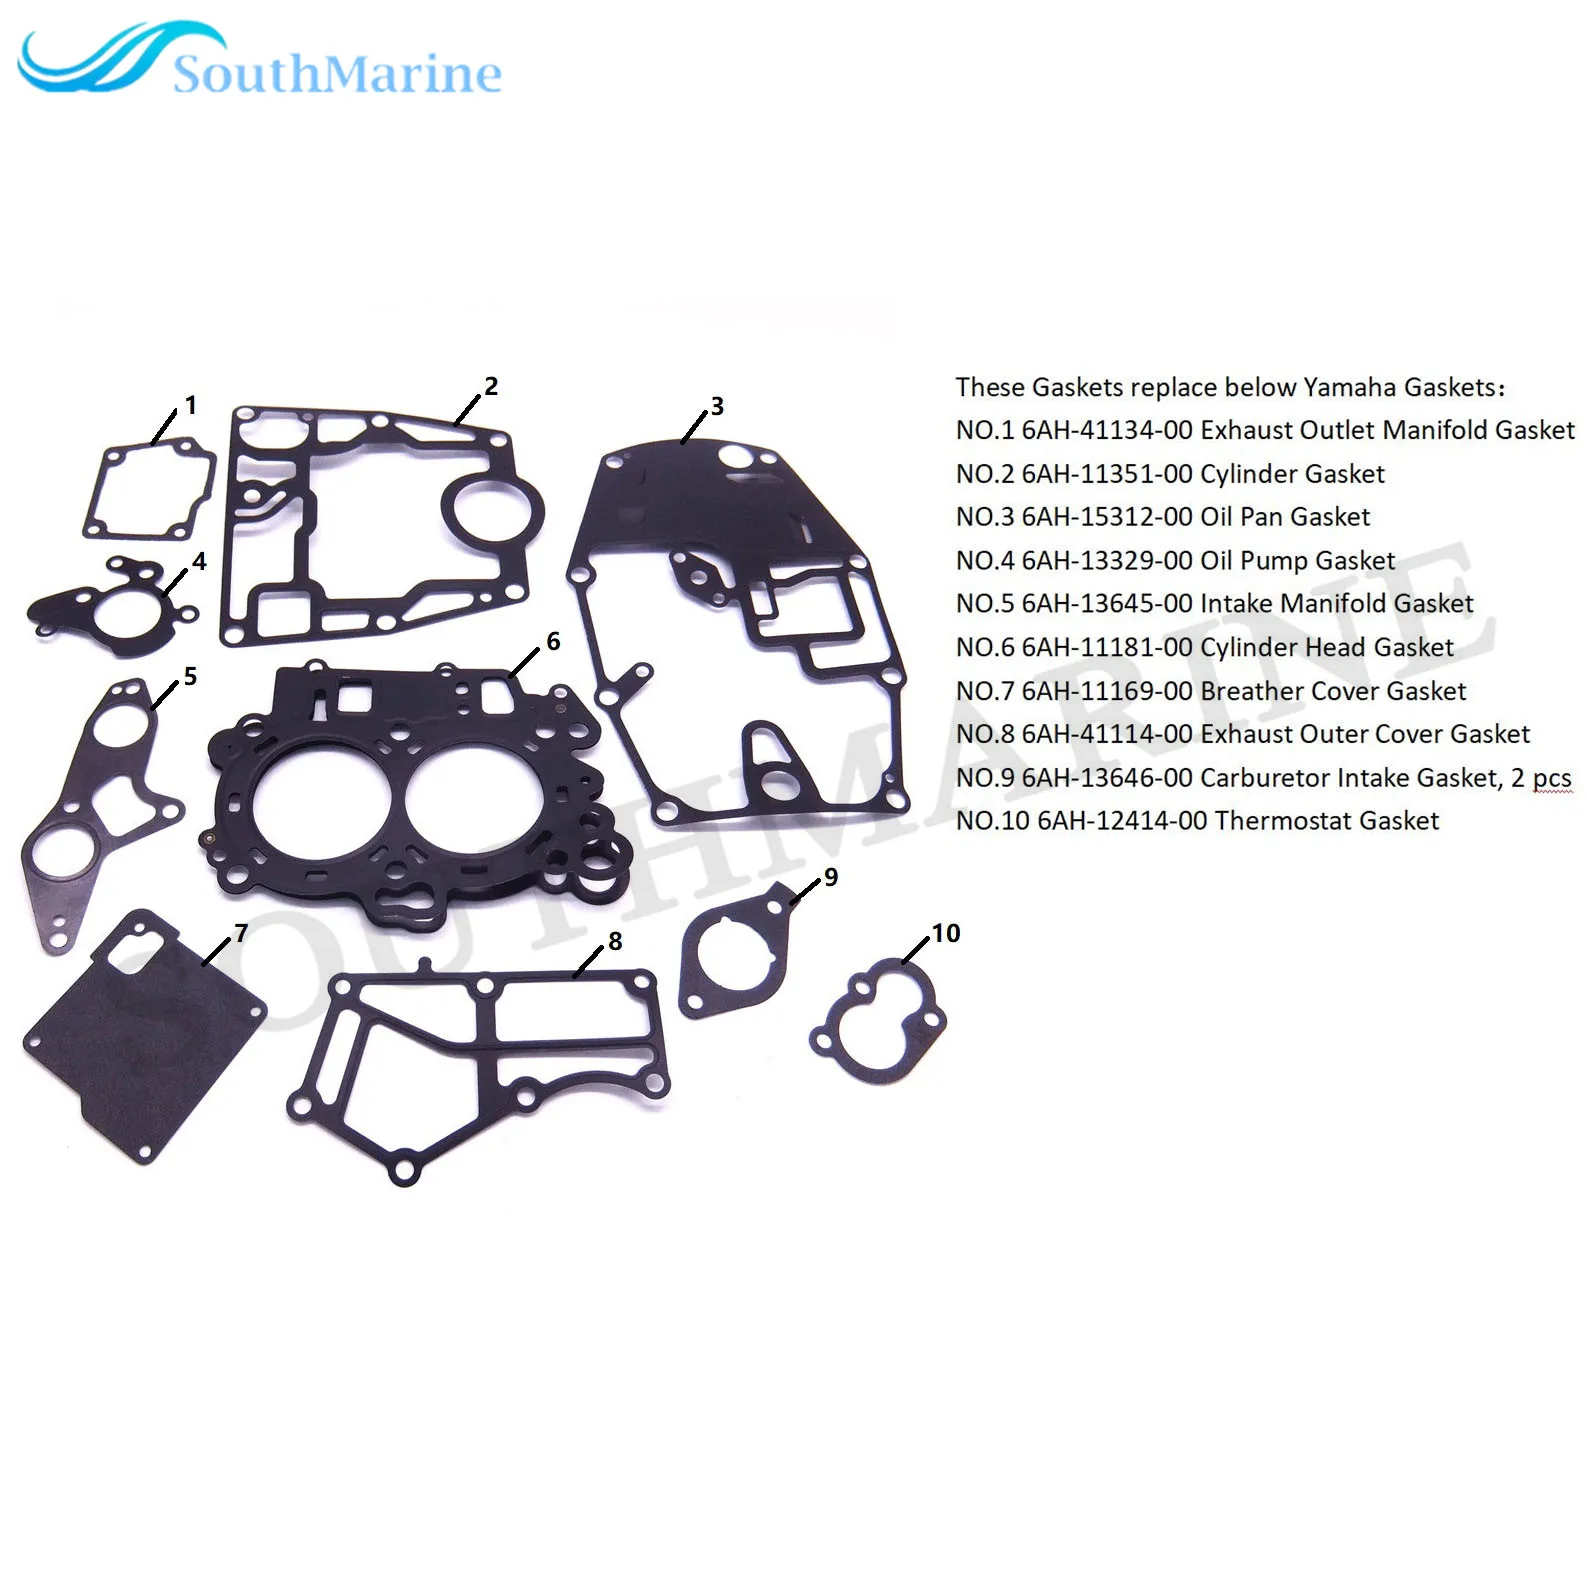 6AH-11181-00 Cylinder Head Gasket for Yamaha Outboard 4-Stroke 20HP F20 F15C 